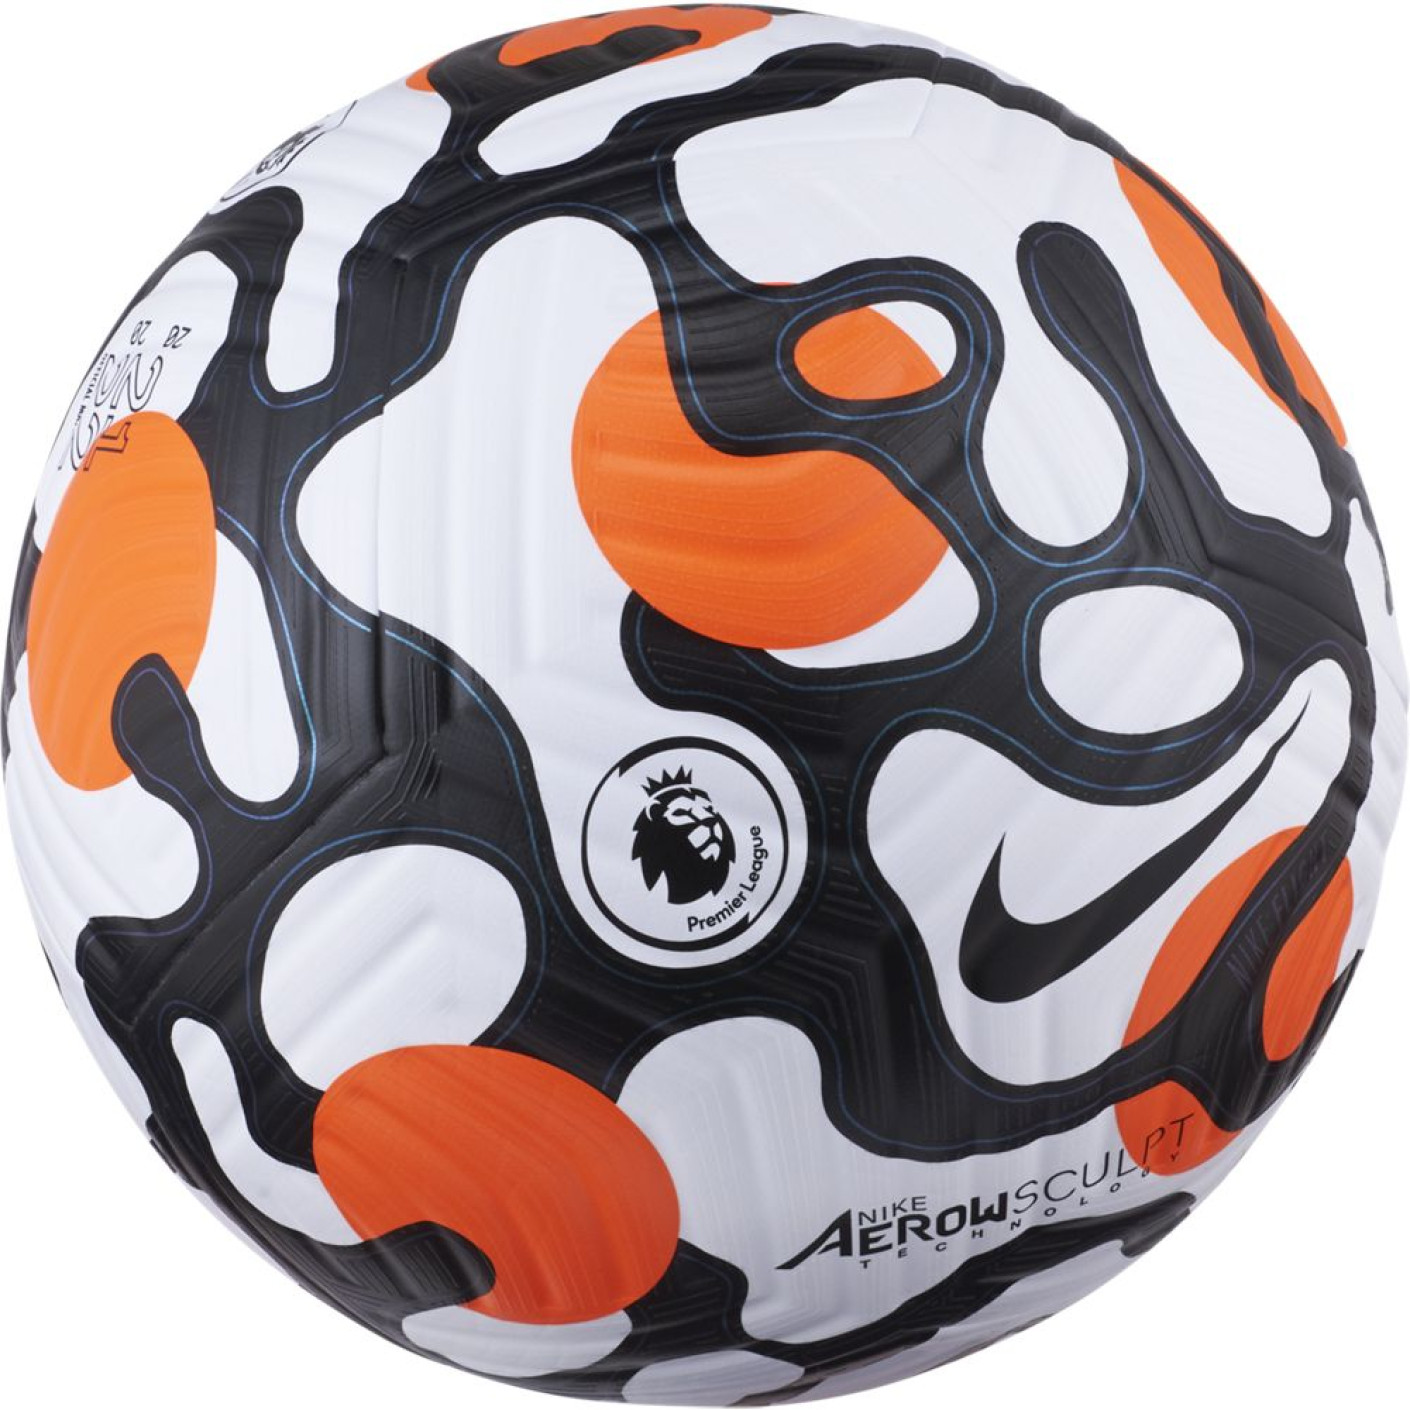 Nike Premier League Flight Ball White Orange Black